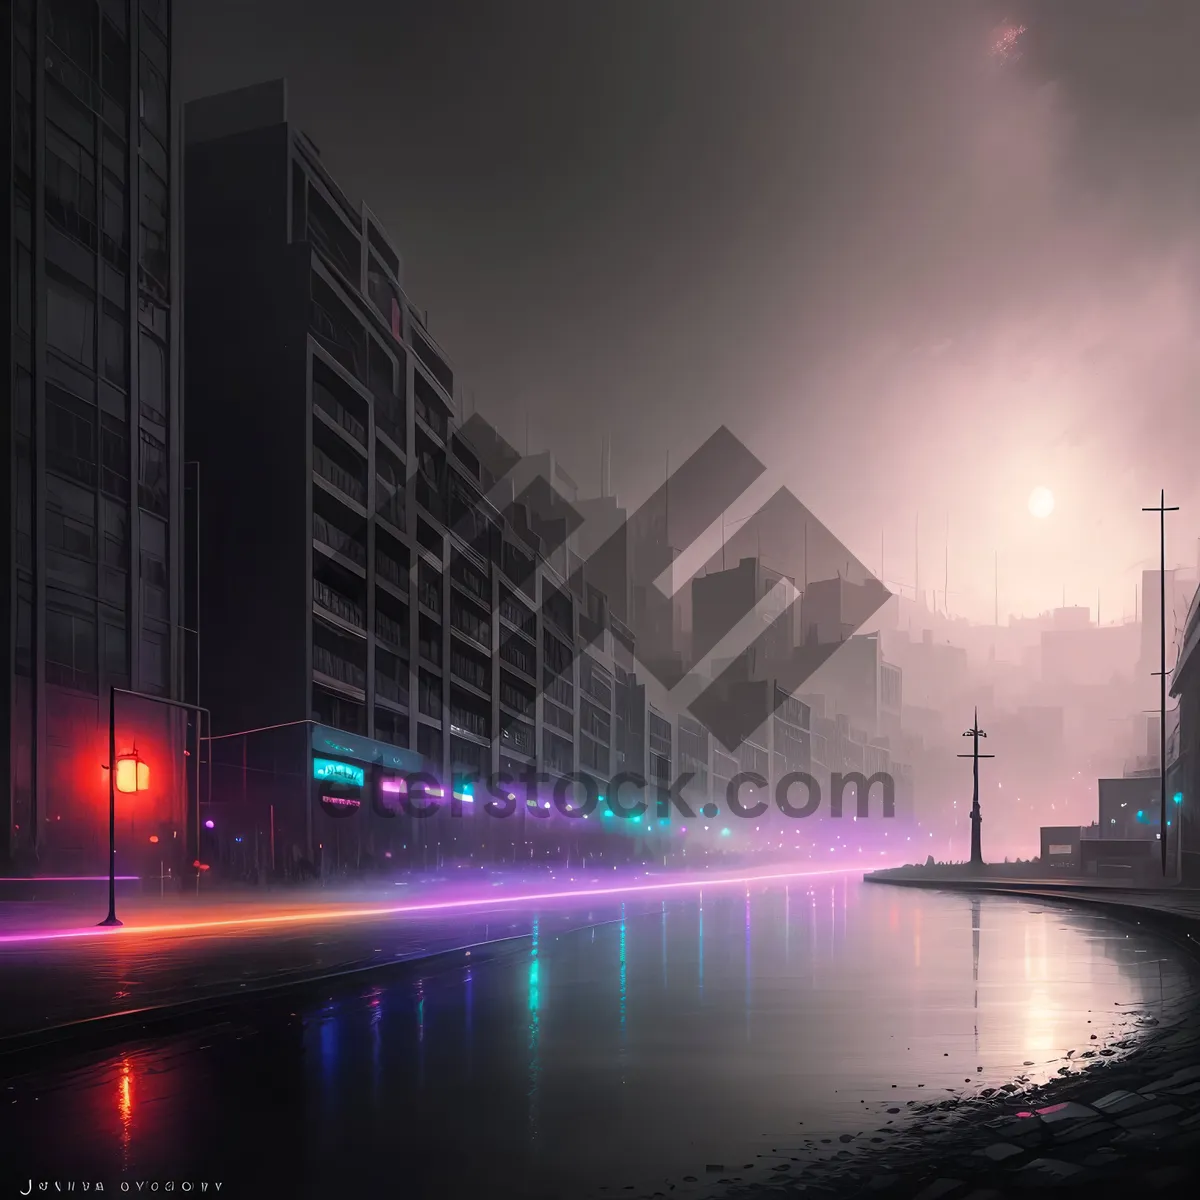 Picture of Urban skyline with illuminated suspension bridge over river